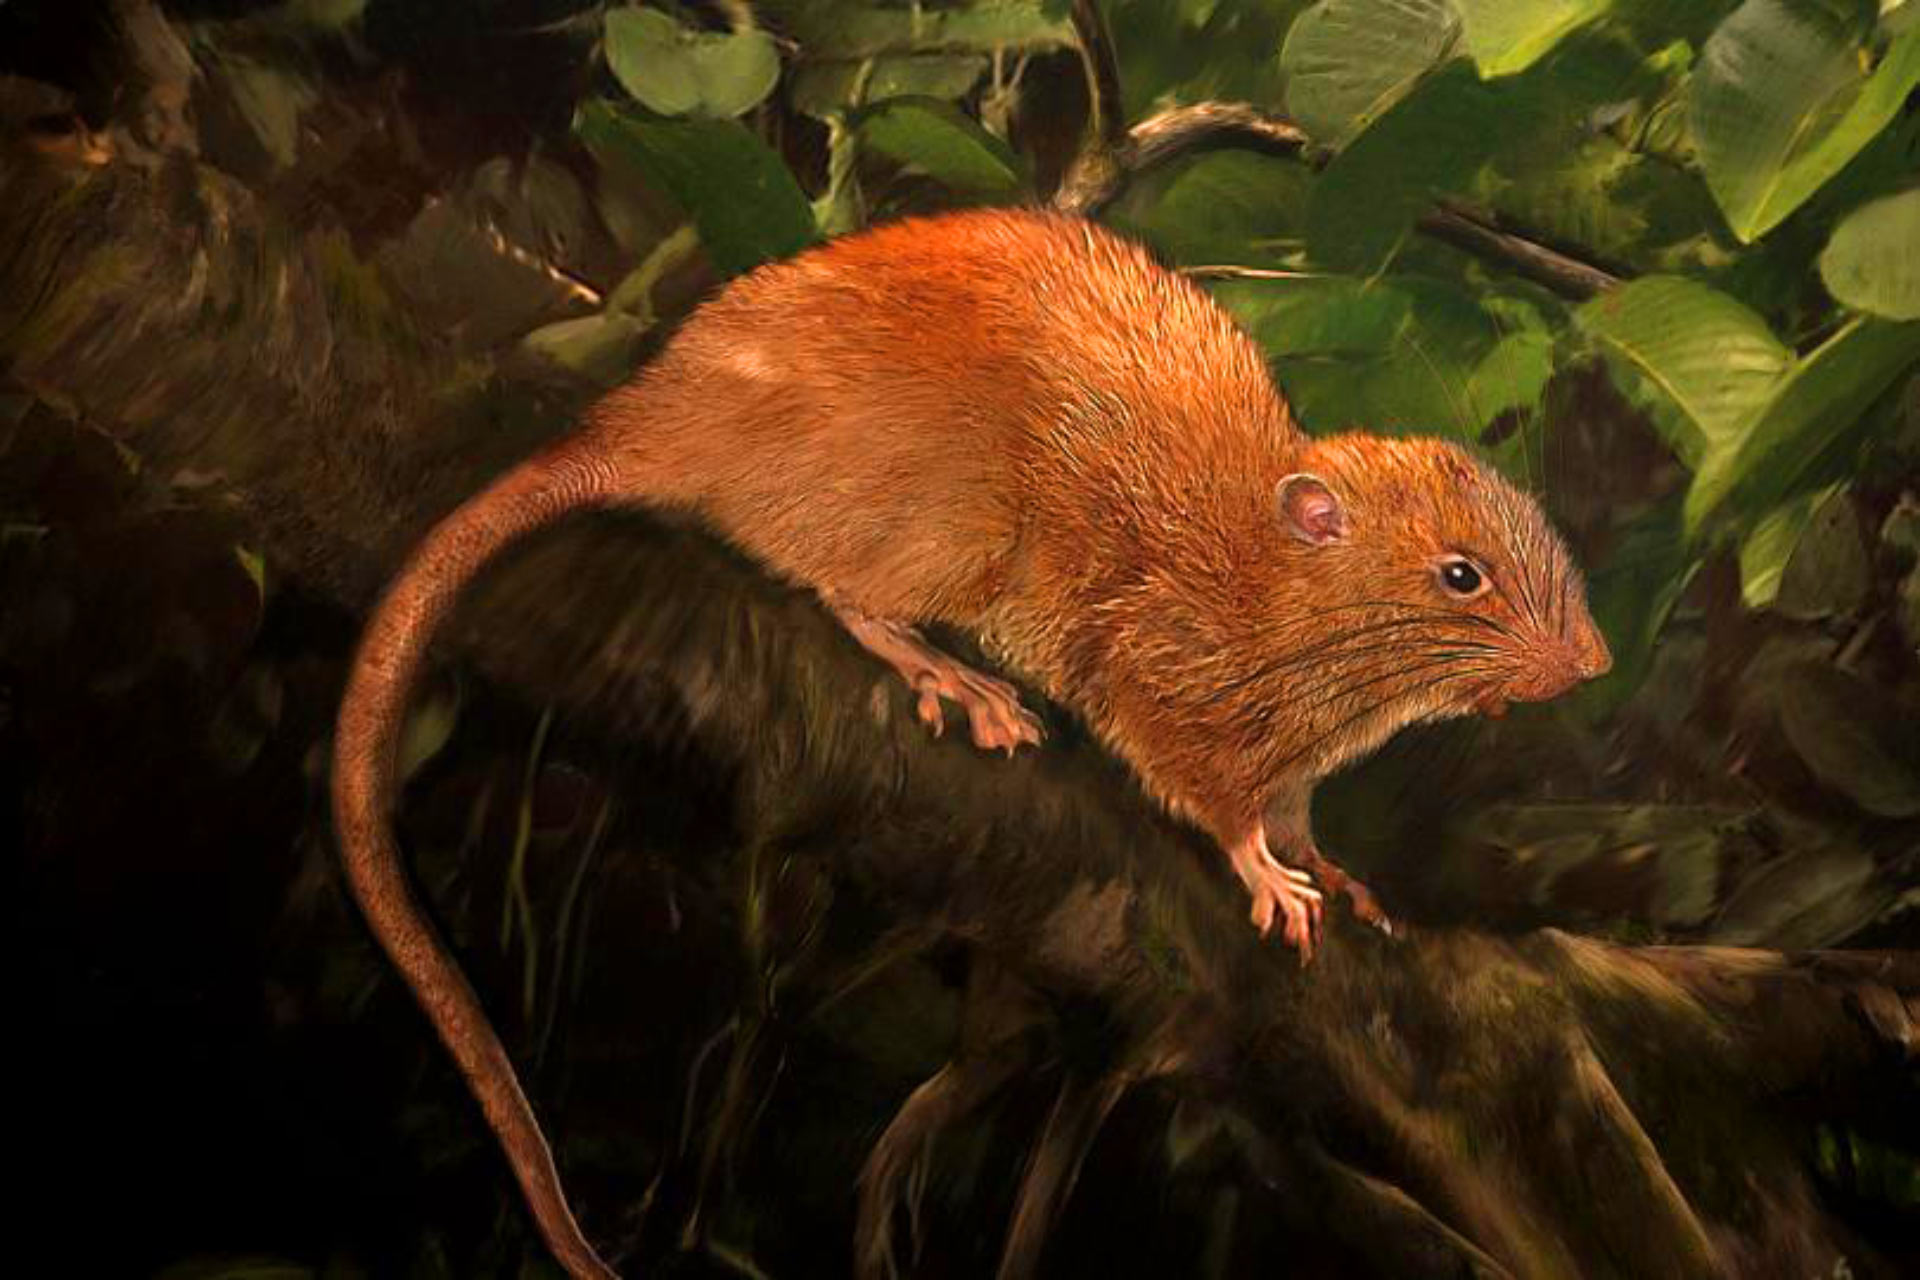 Giant tree rat species, Uromys vika, found at last